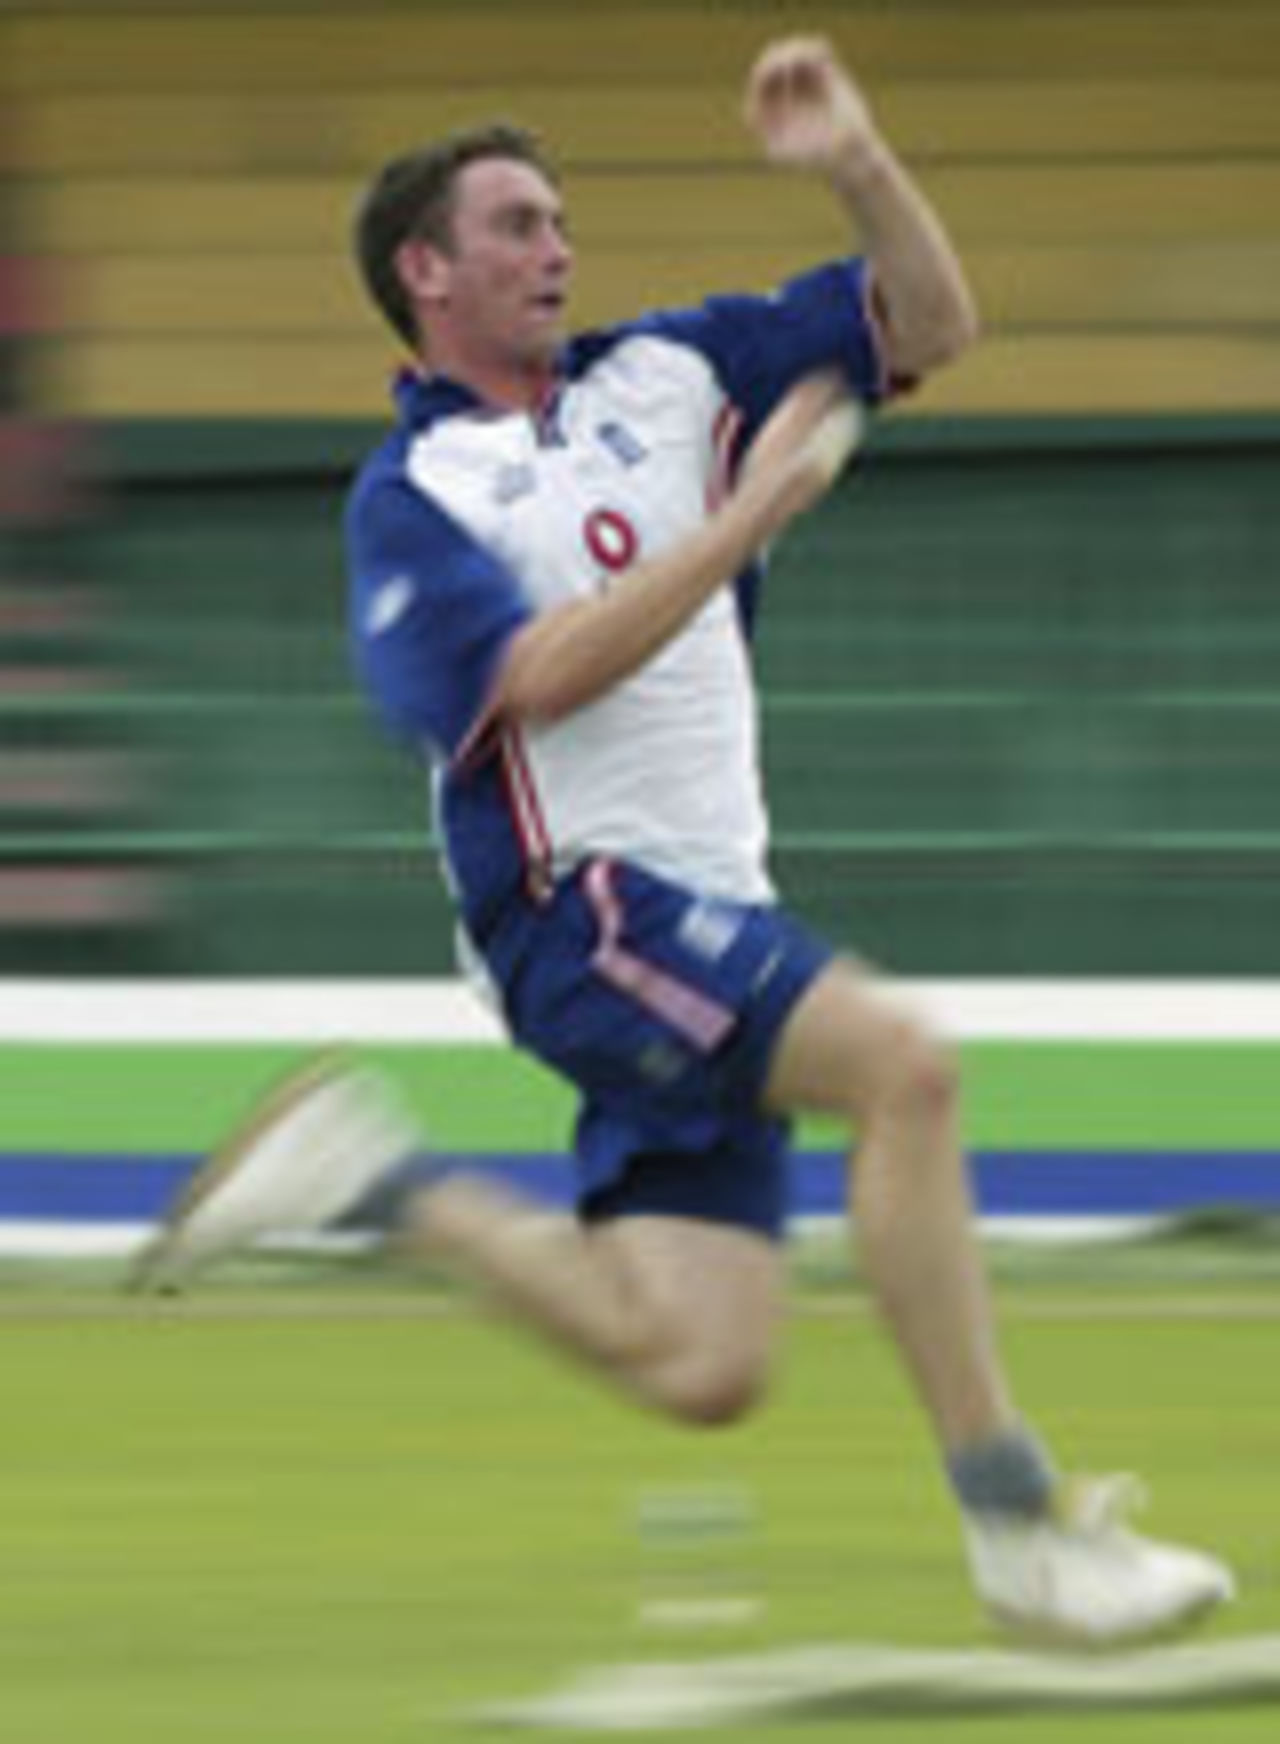 James Kirtley bowling in practice gear ahead of the 2nd ODI, Sri Lanka v England, Colombo, November 20, 2003